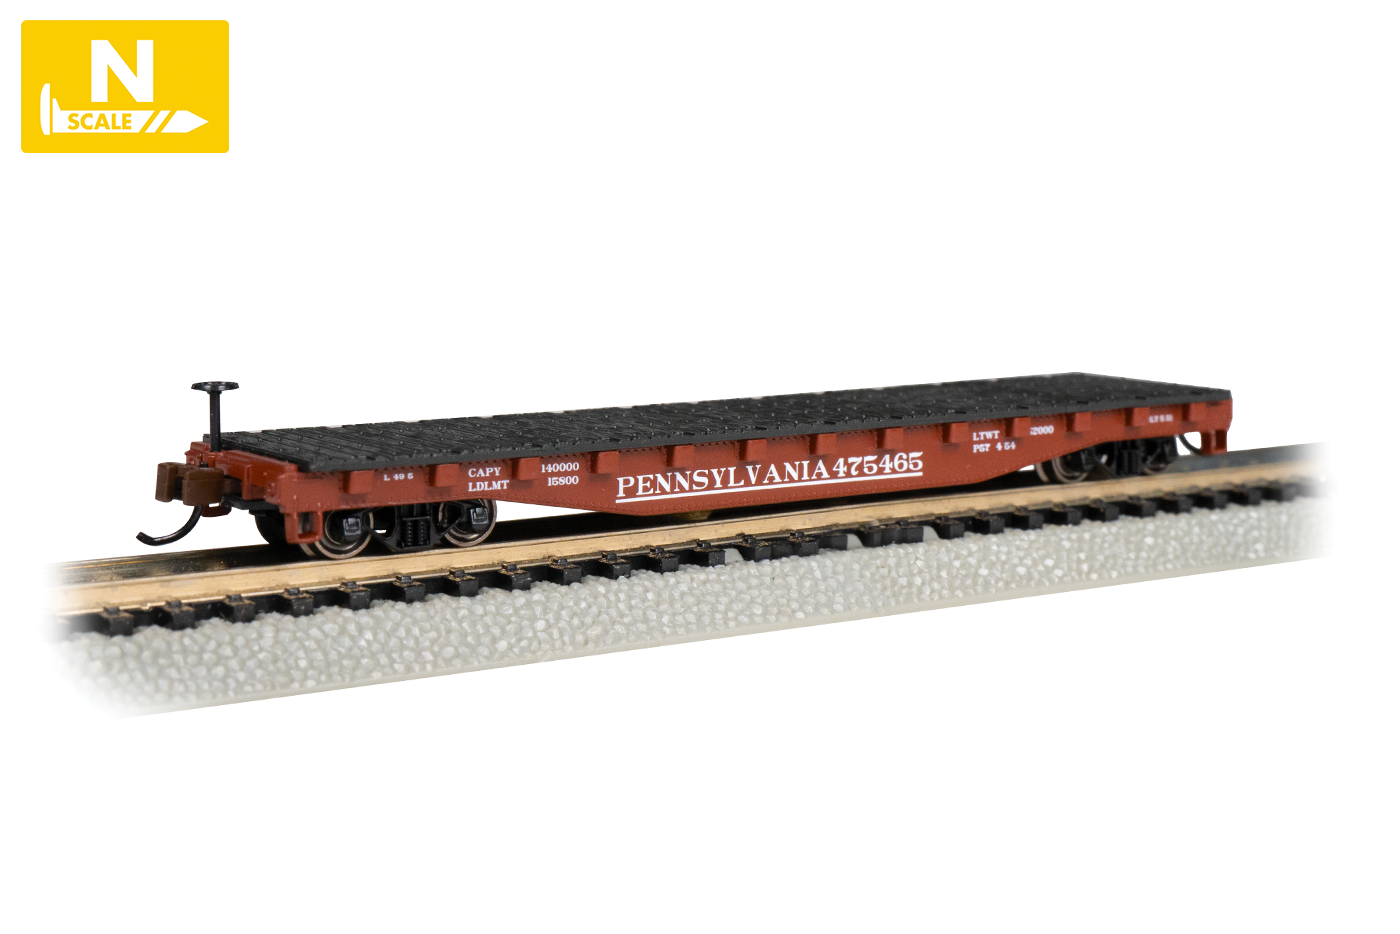 52' Flatcar - Pennsylvania Railroad #475465